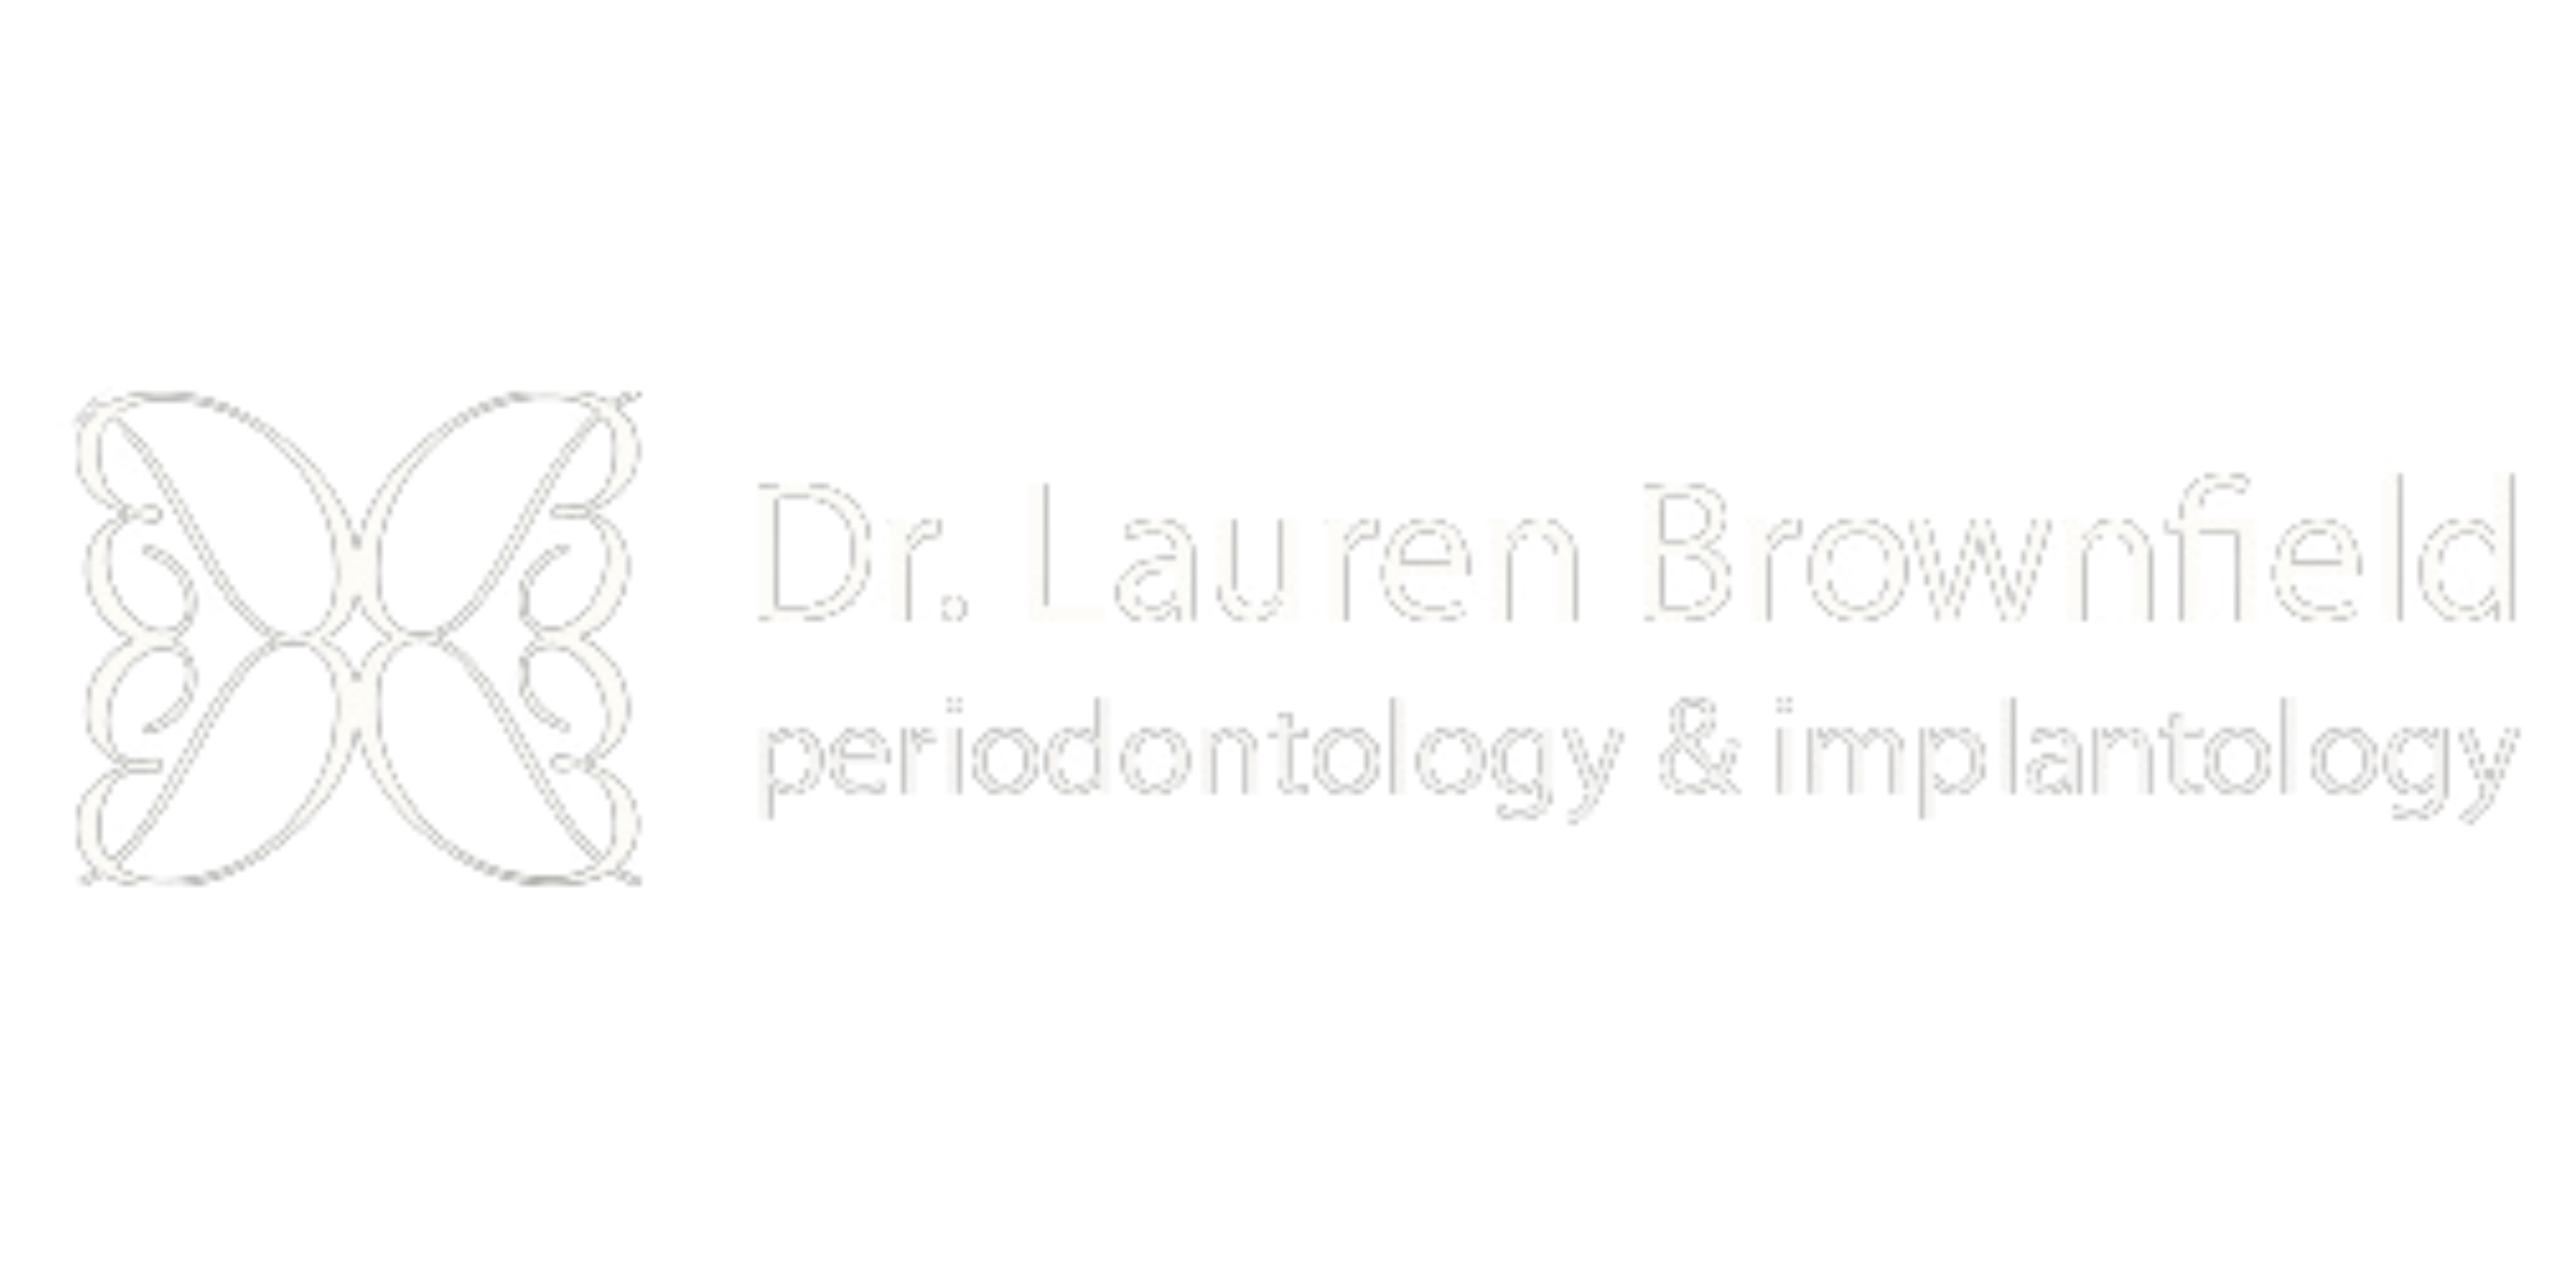 Dr Brownfield Logo